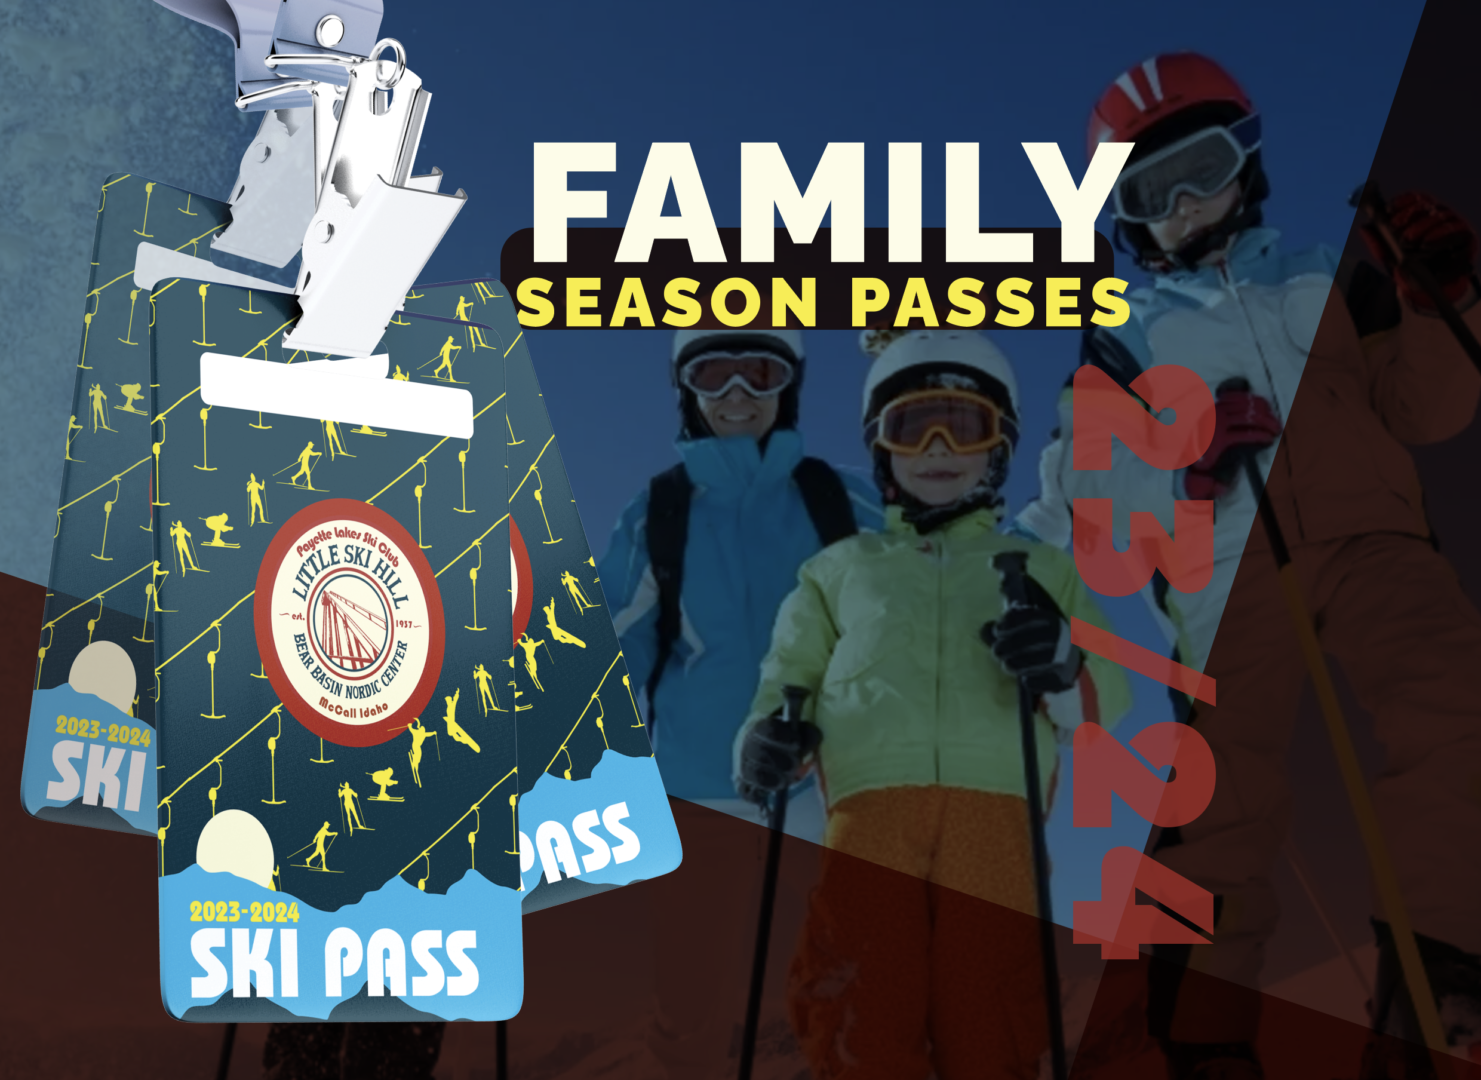 family nordic pass